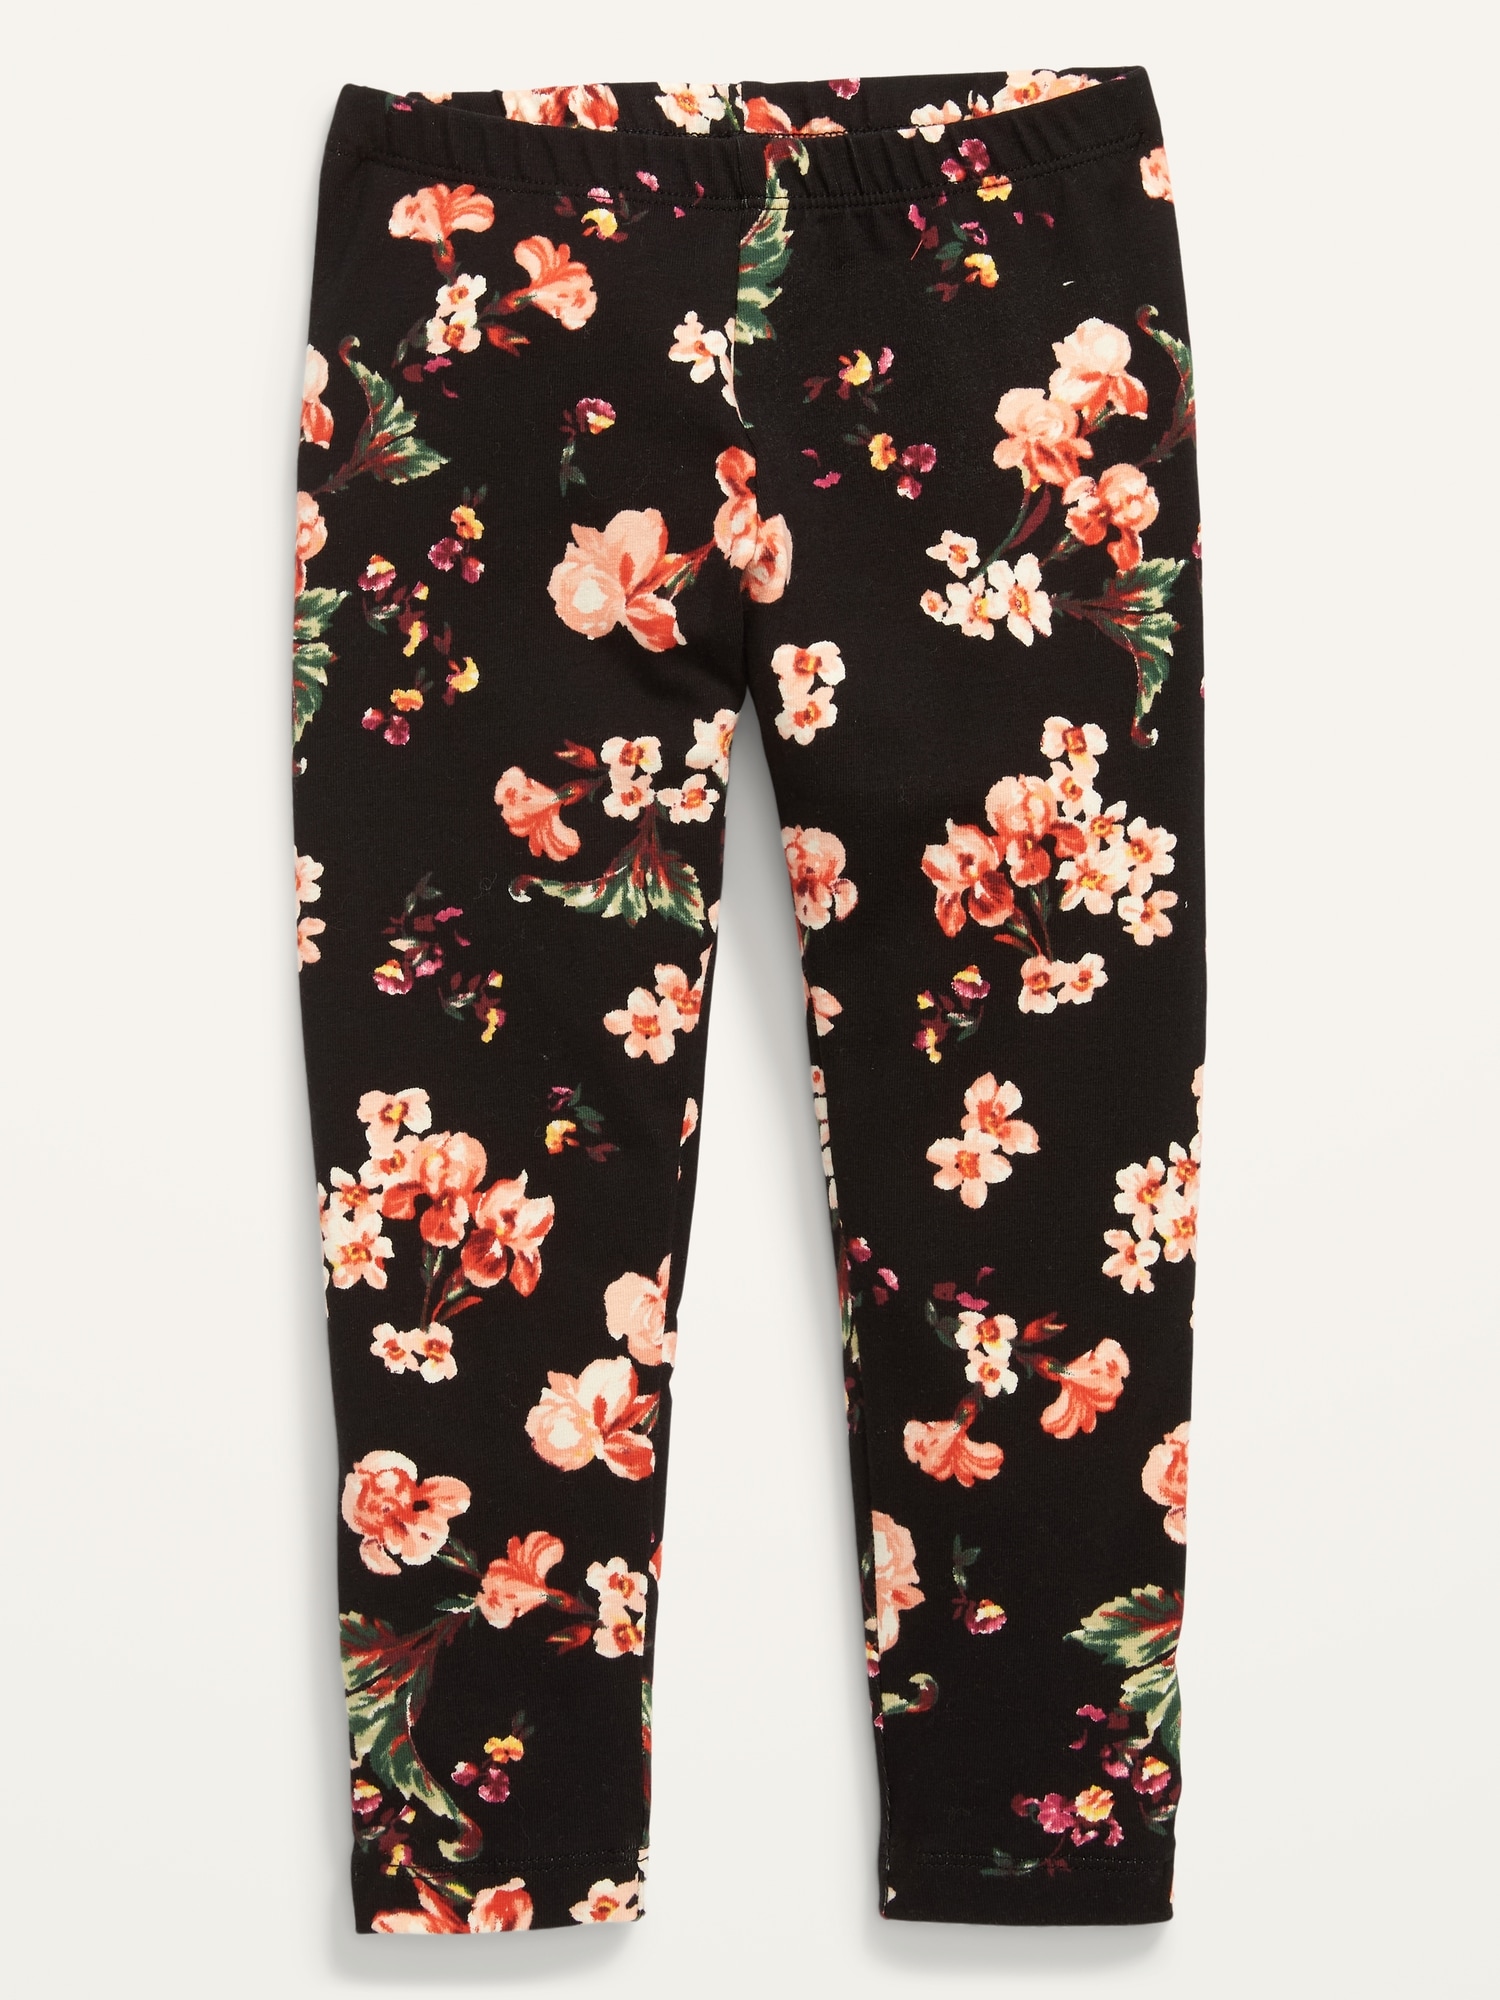 Girls Leggings Size Large 10 - 12 Stretch Pants Floral Navy